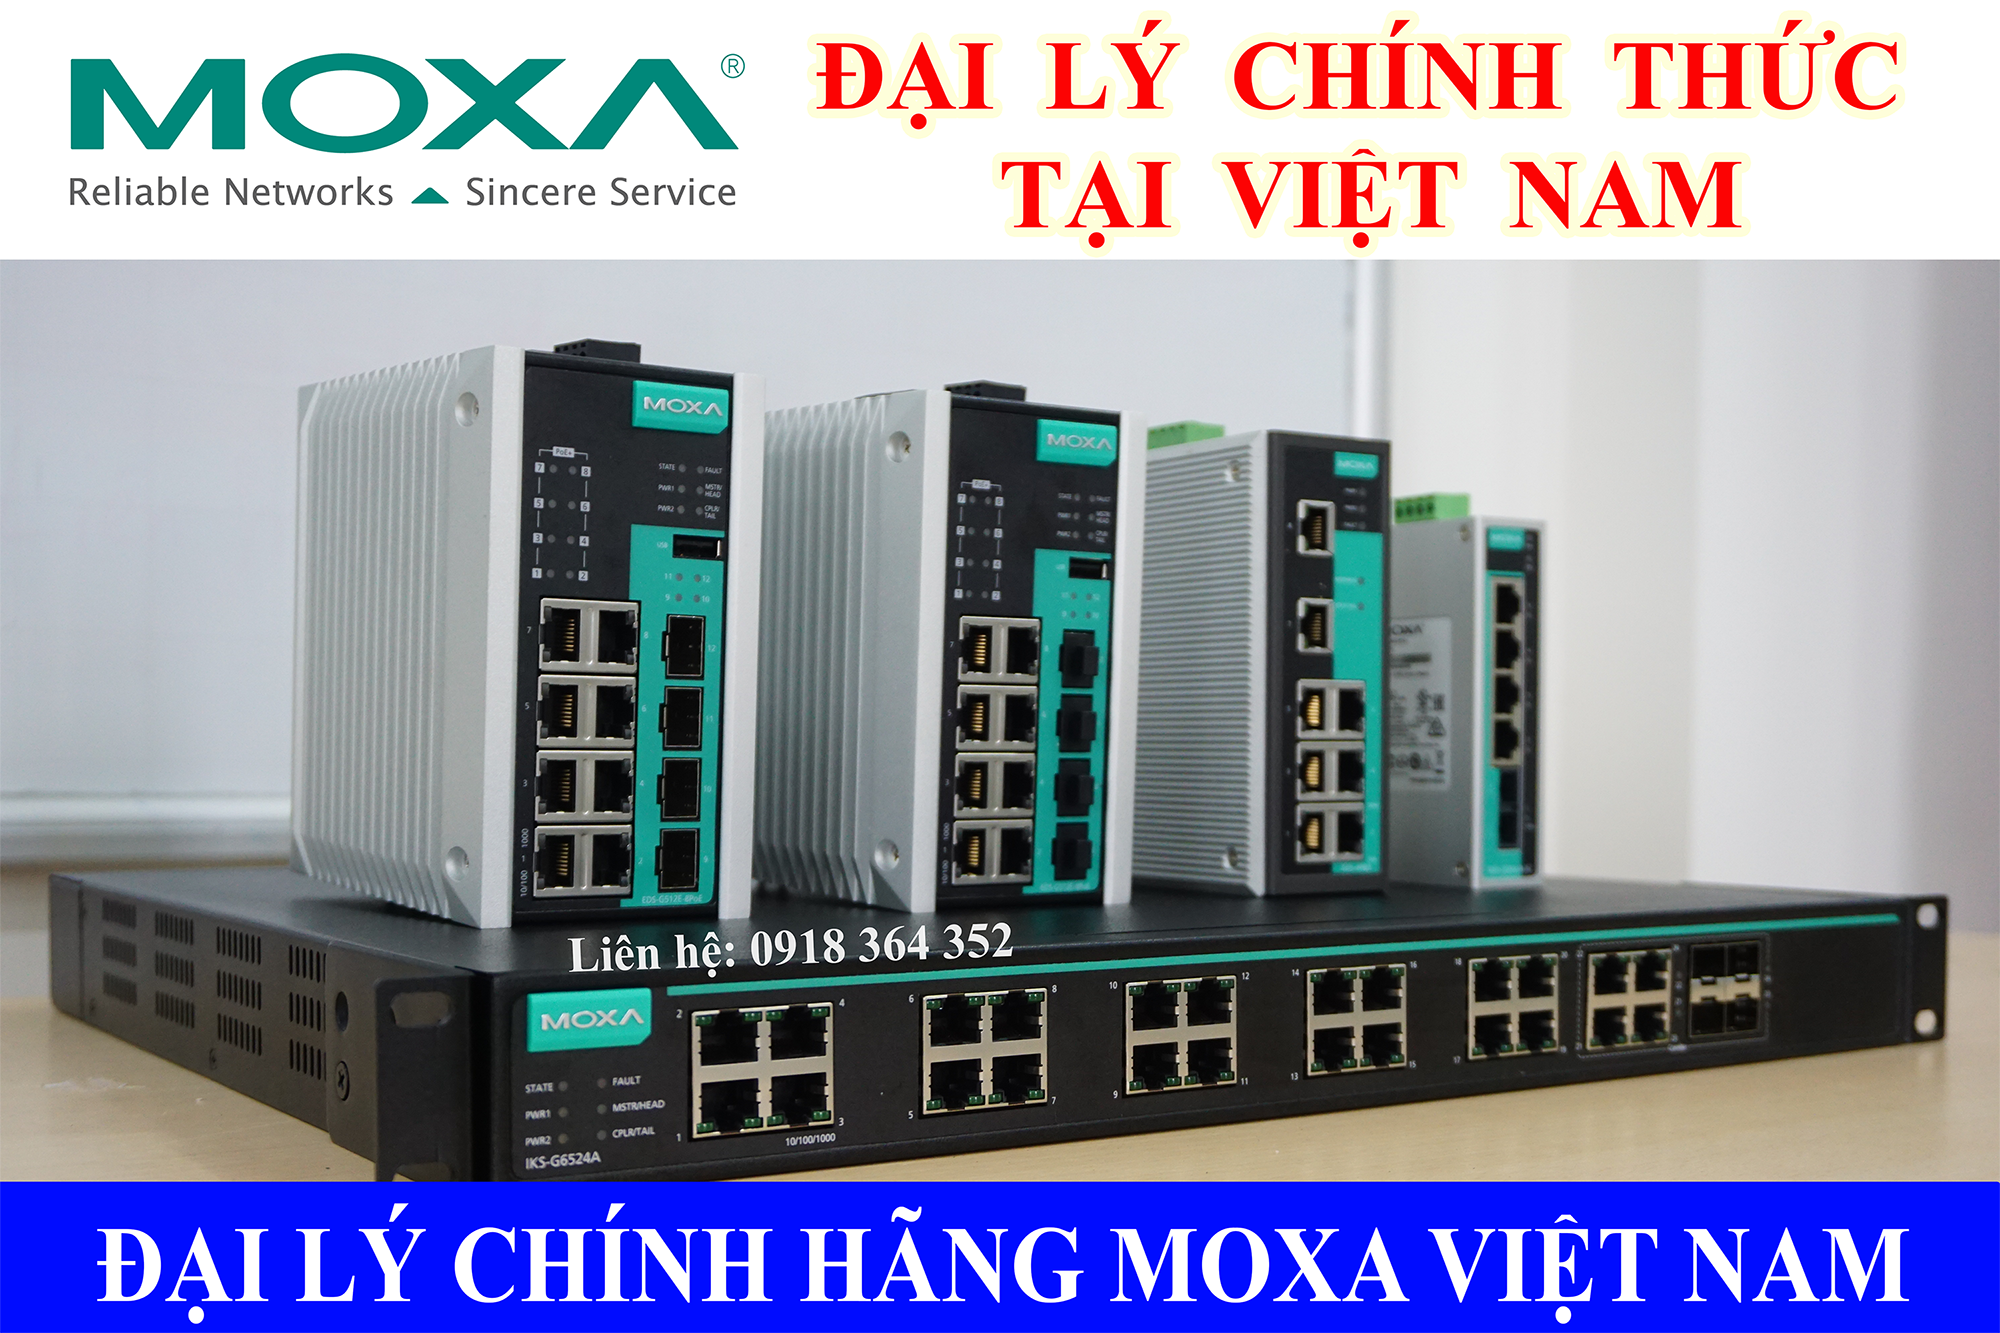 dai-ly-uy-quyen-moxa-vietnam-dai-dien-chinh-thuc-moxa-viet-nam-moxavn.png